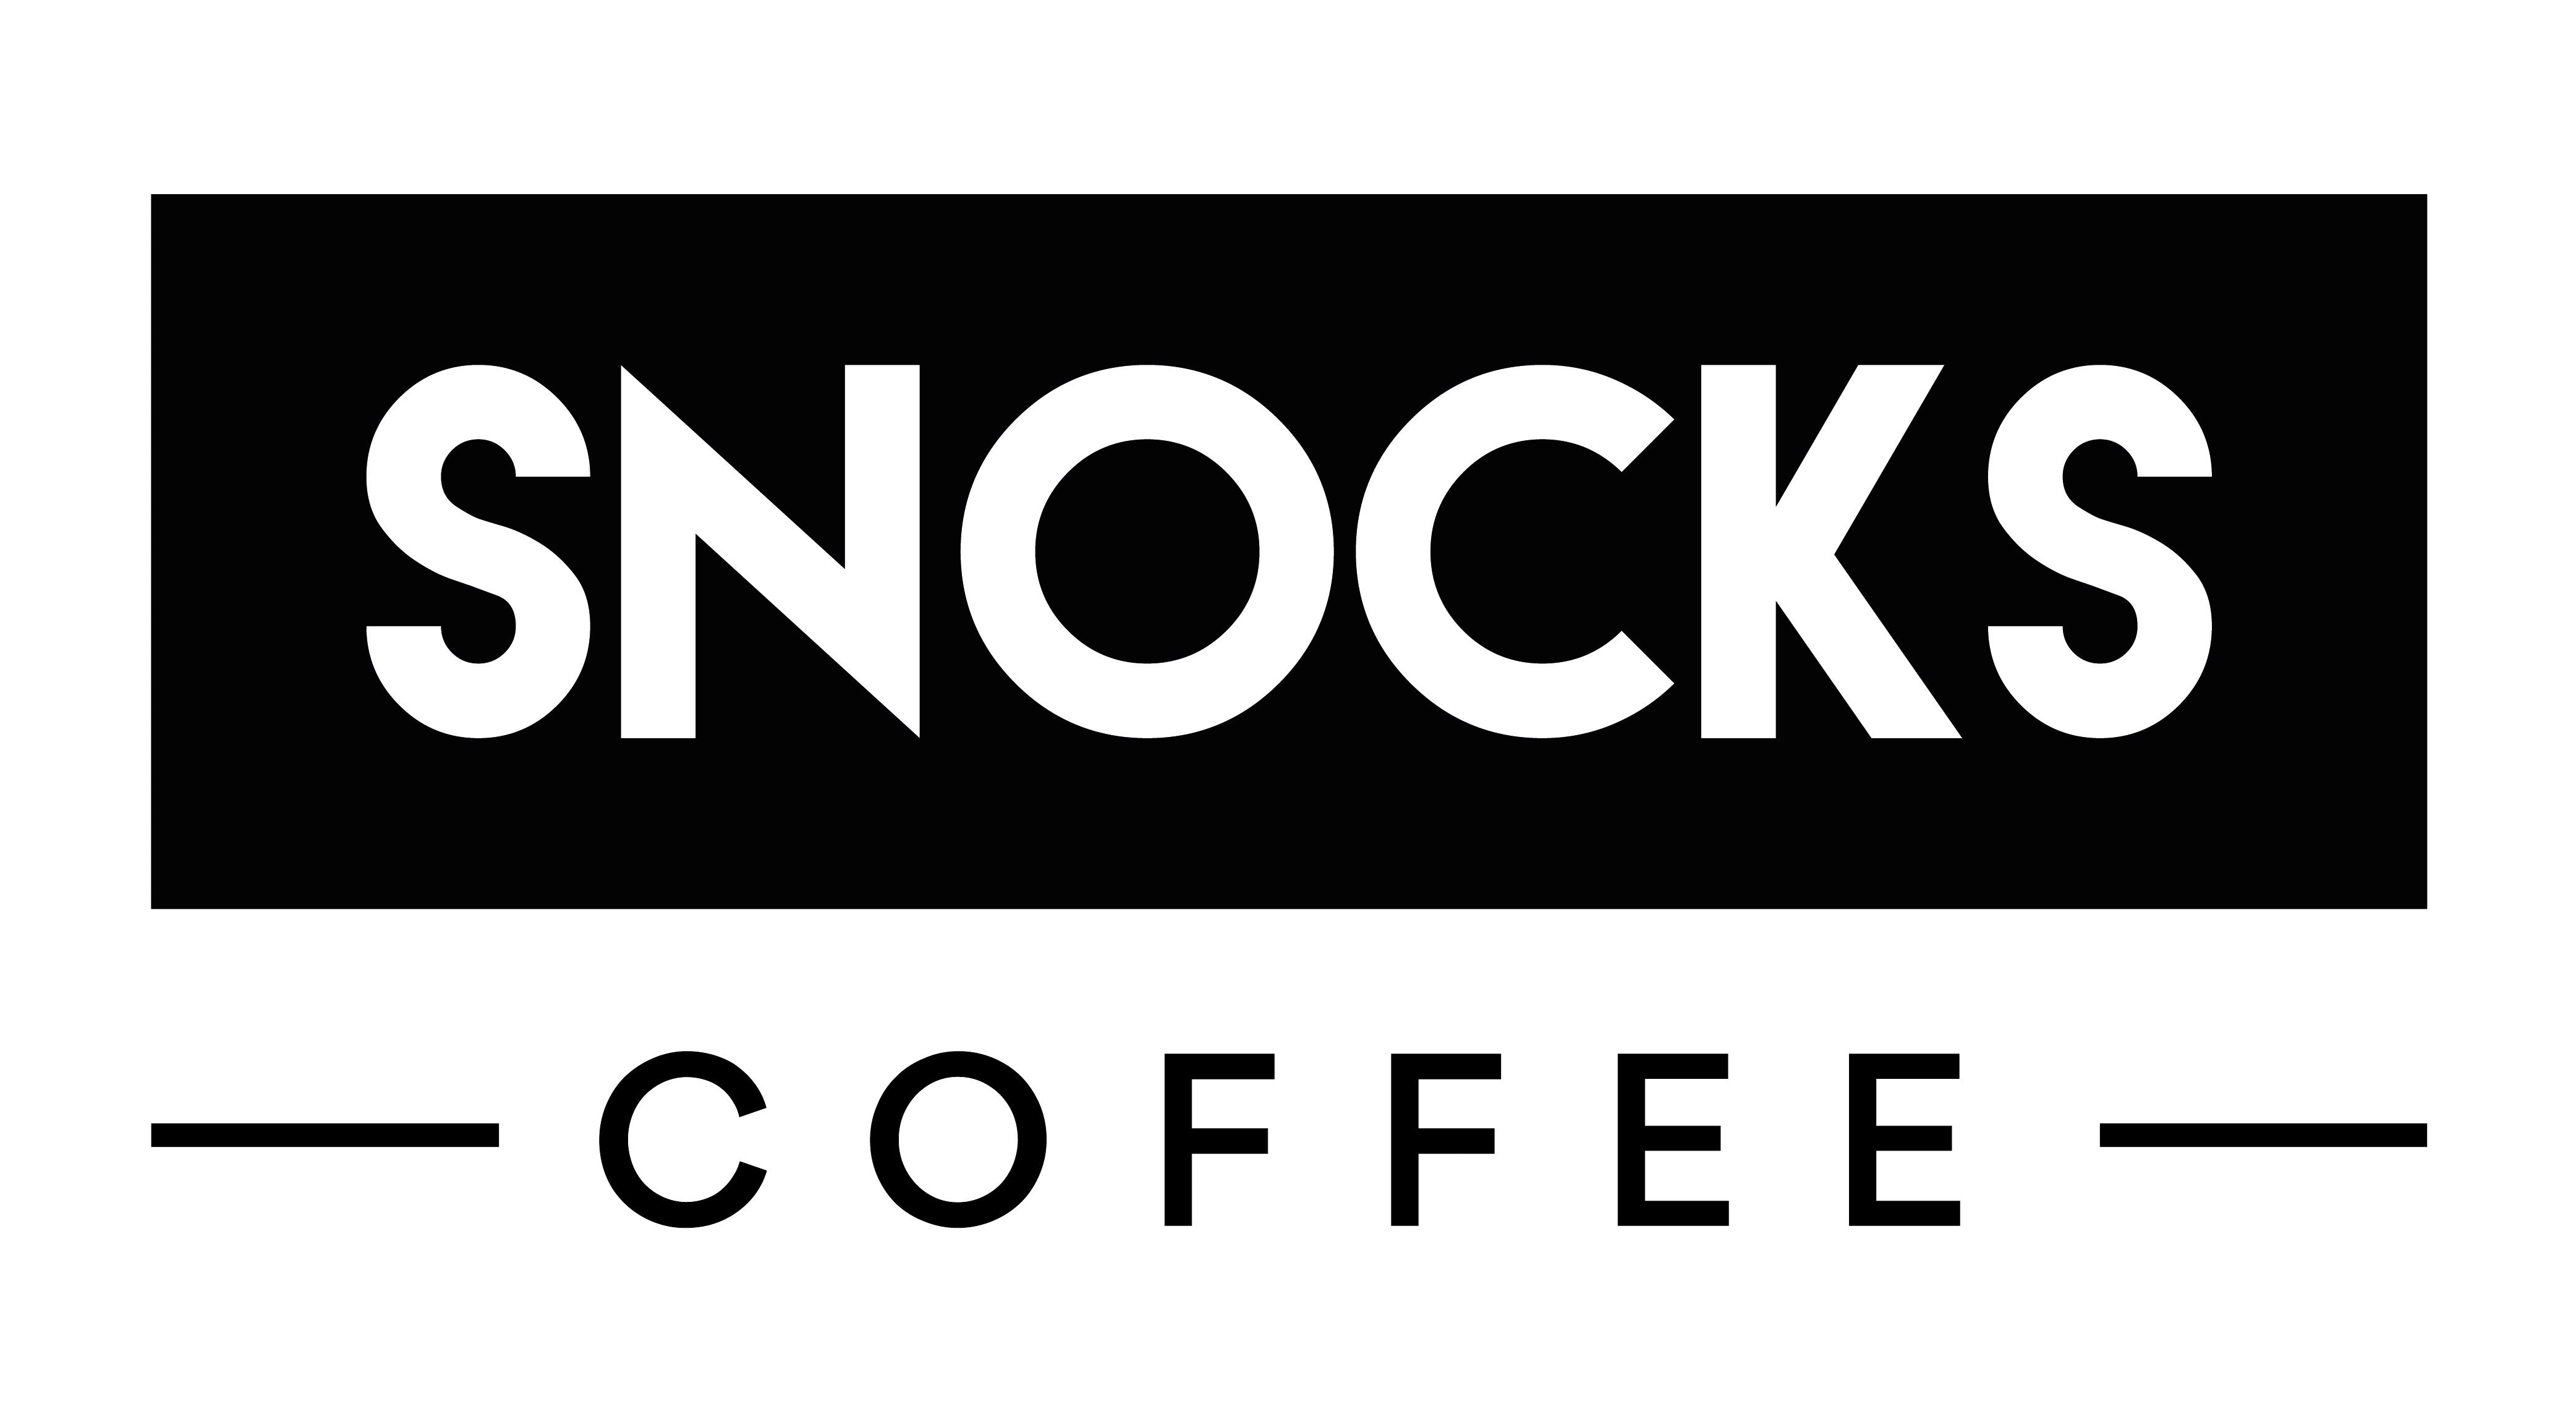 (c) Snockscoffee.com